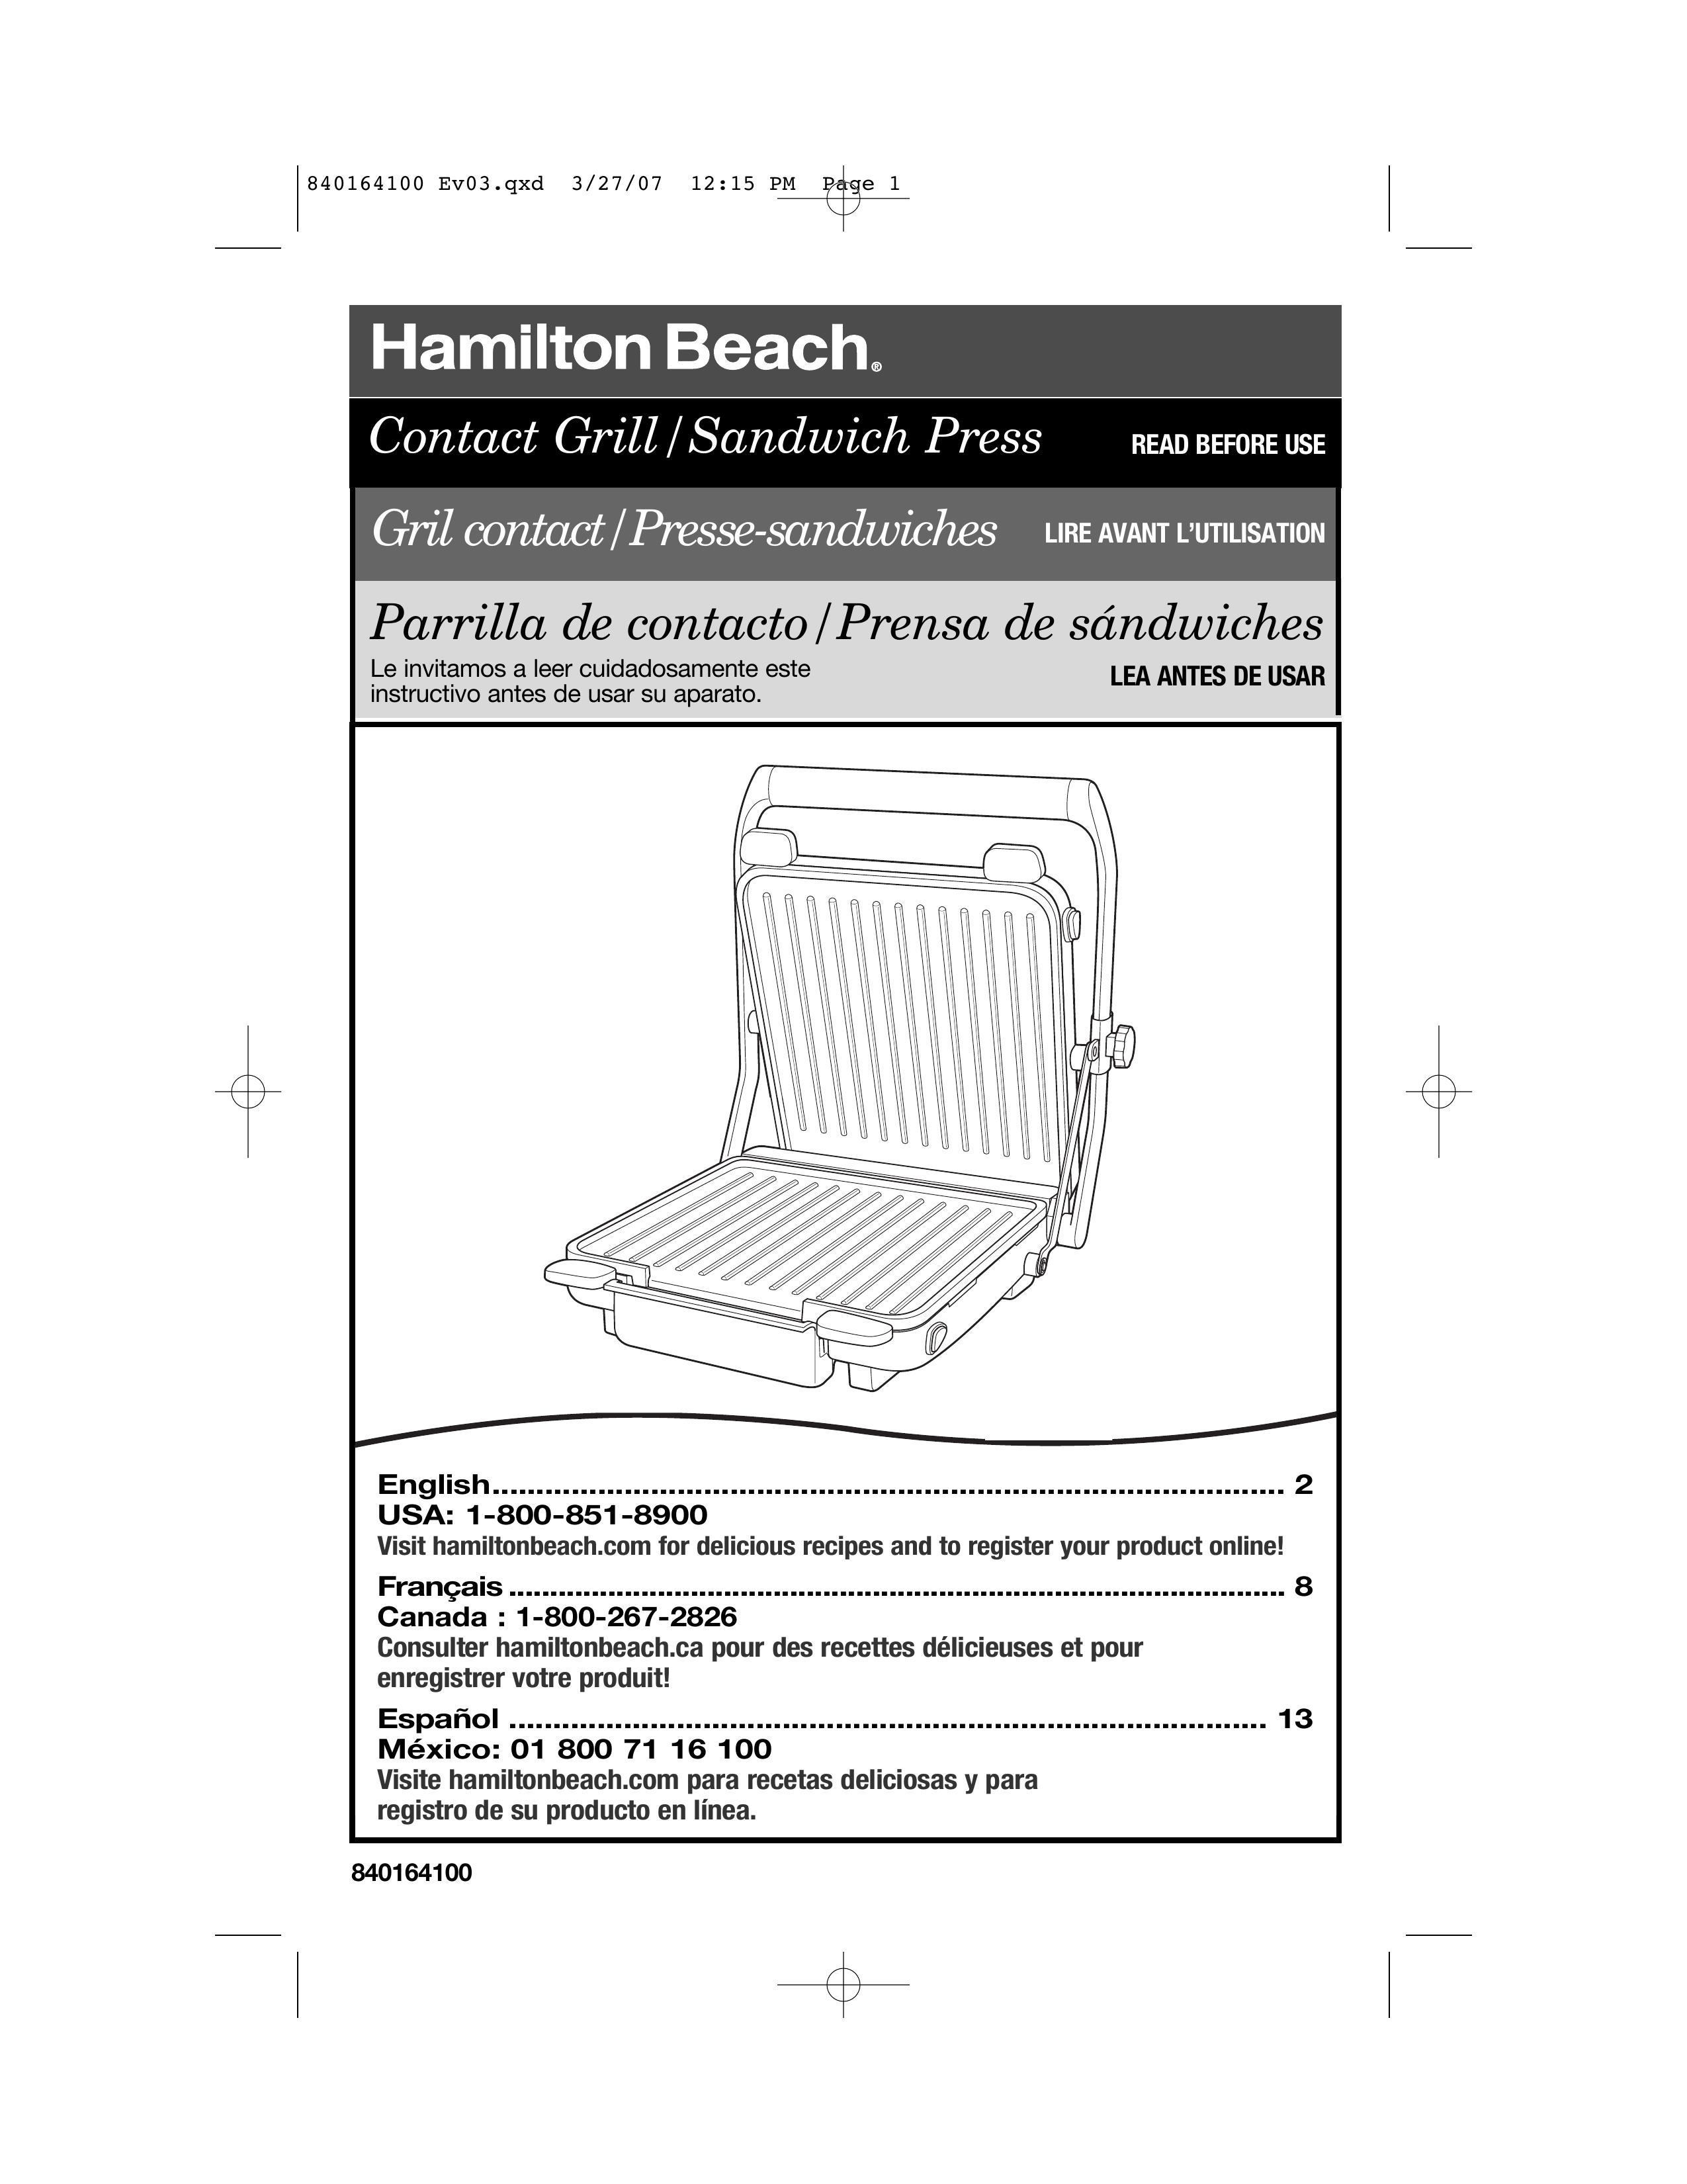 Hamilton Beach 25451 Gas Grill User Manual